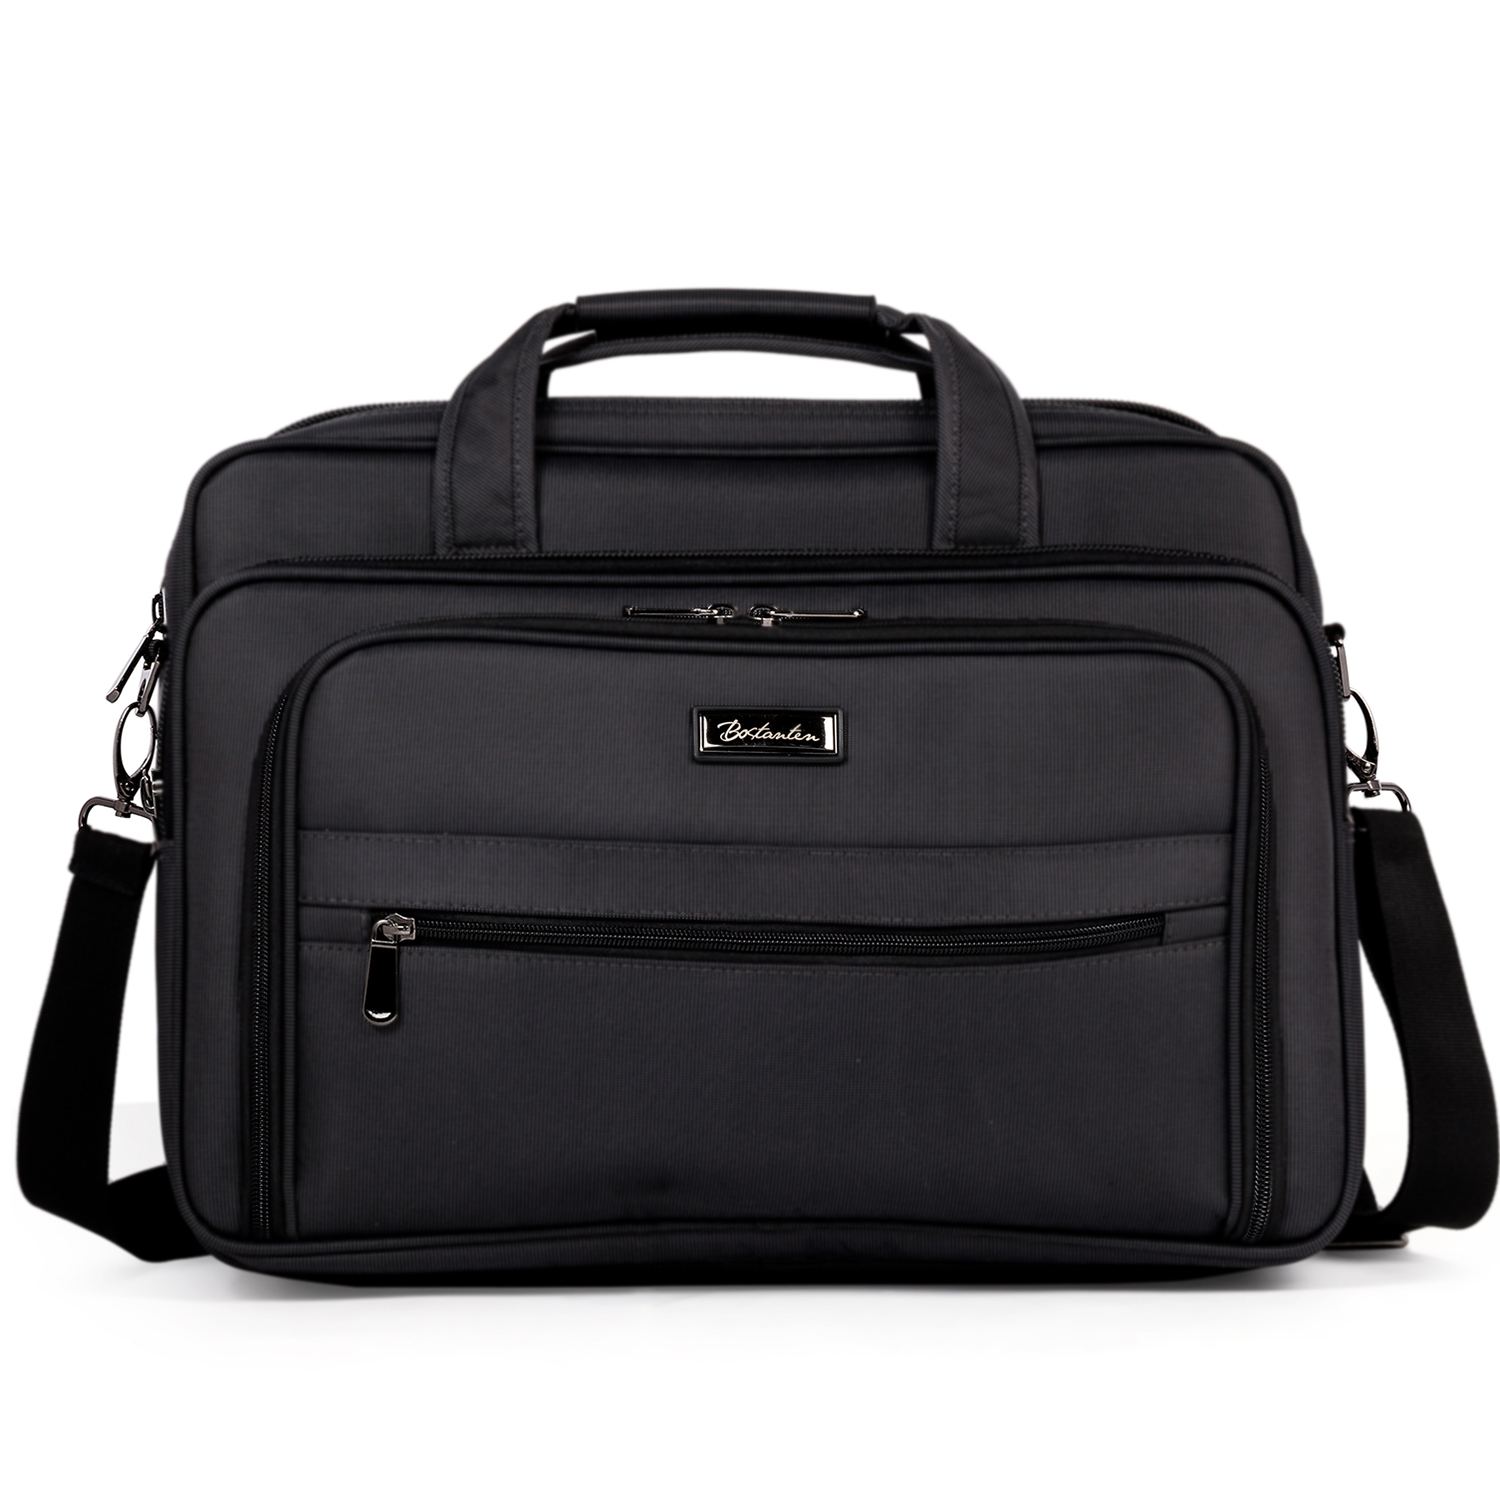 BOSTANTEN Briefcase for Men Laptop Bag 17 inch Water-resistant ...